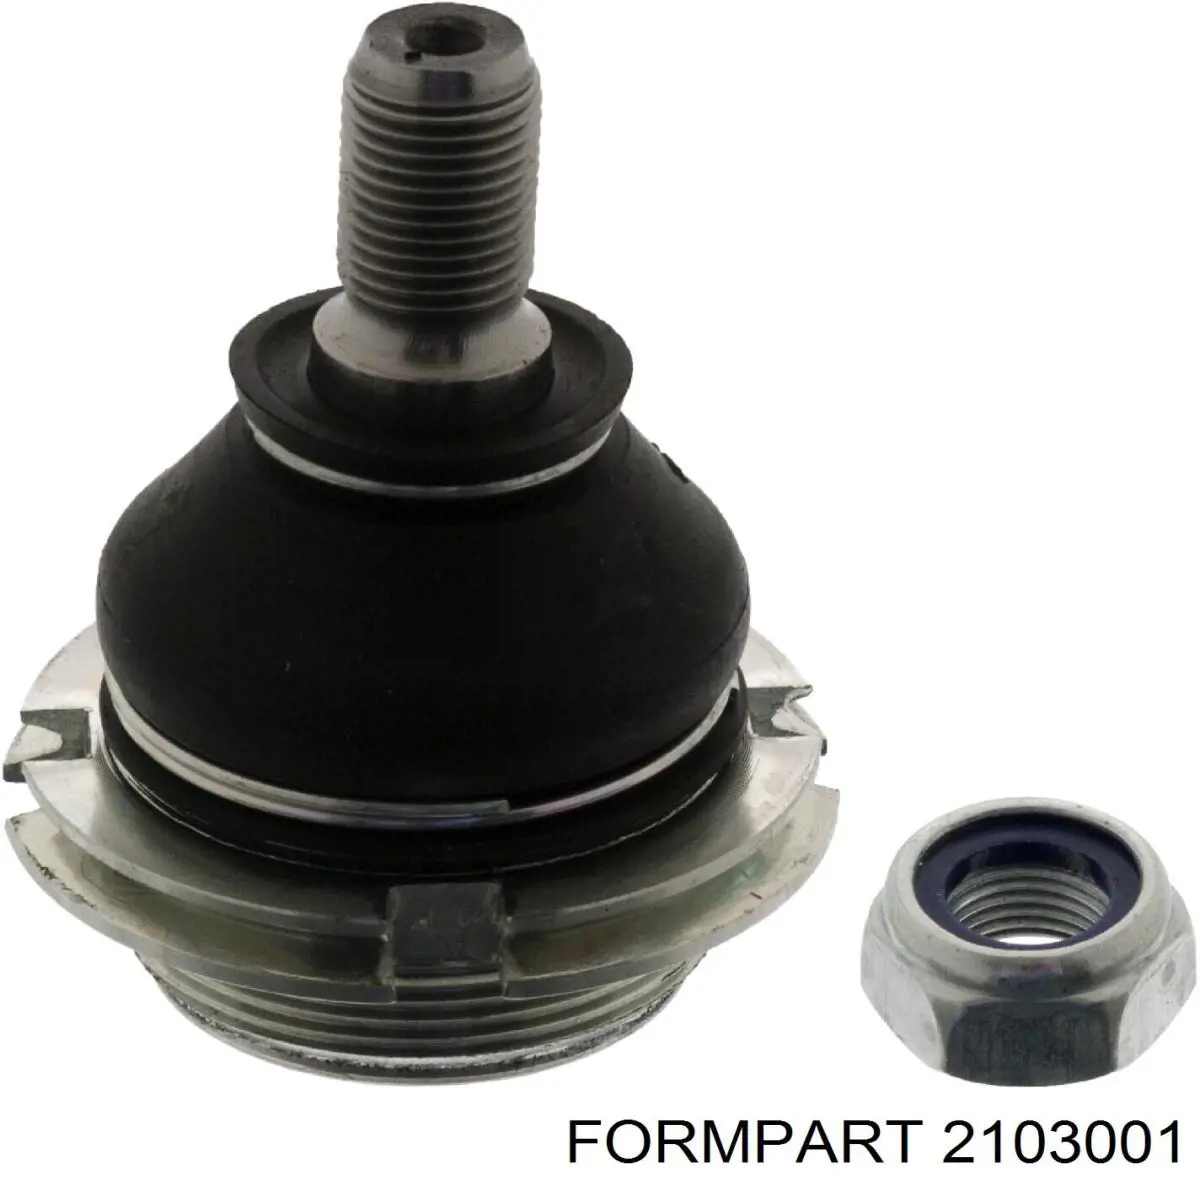 2103001 Formpart/Otoform шаровая опора нижняя